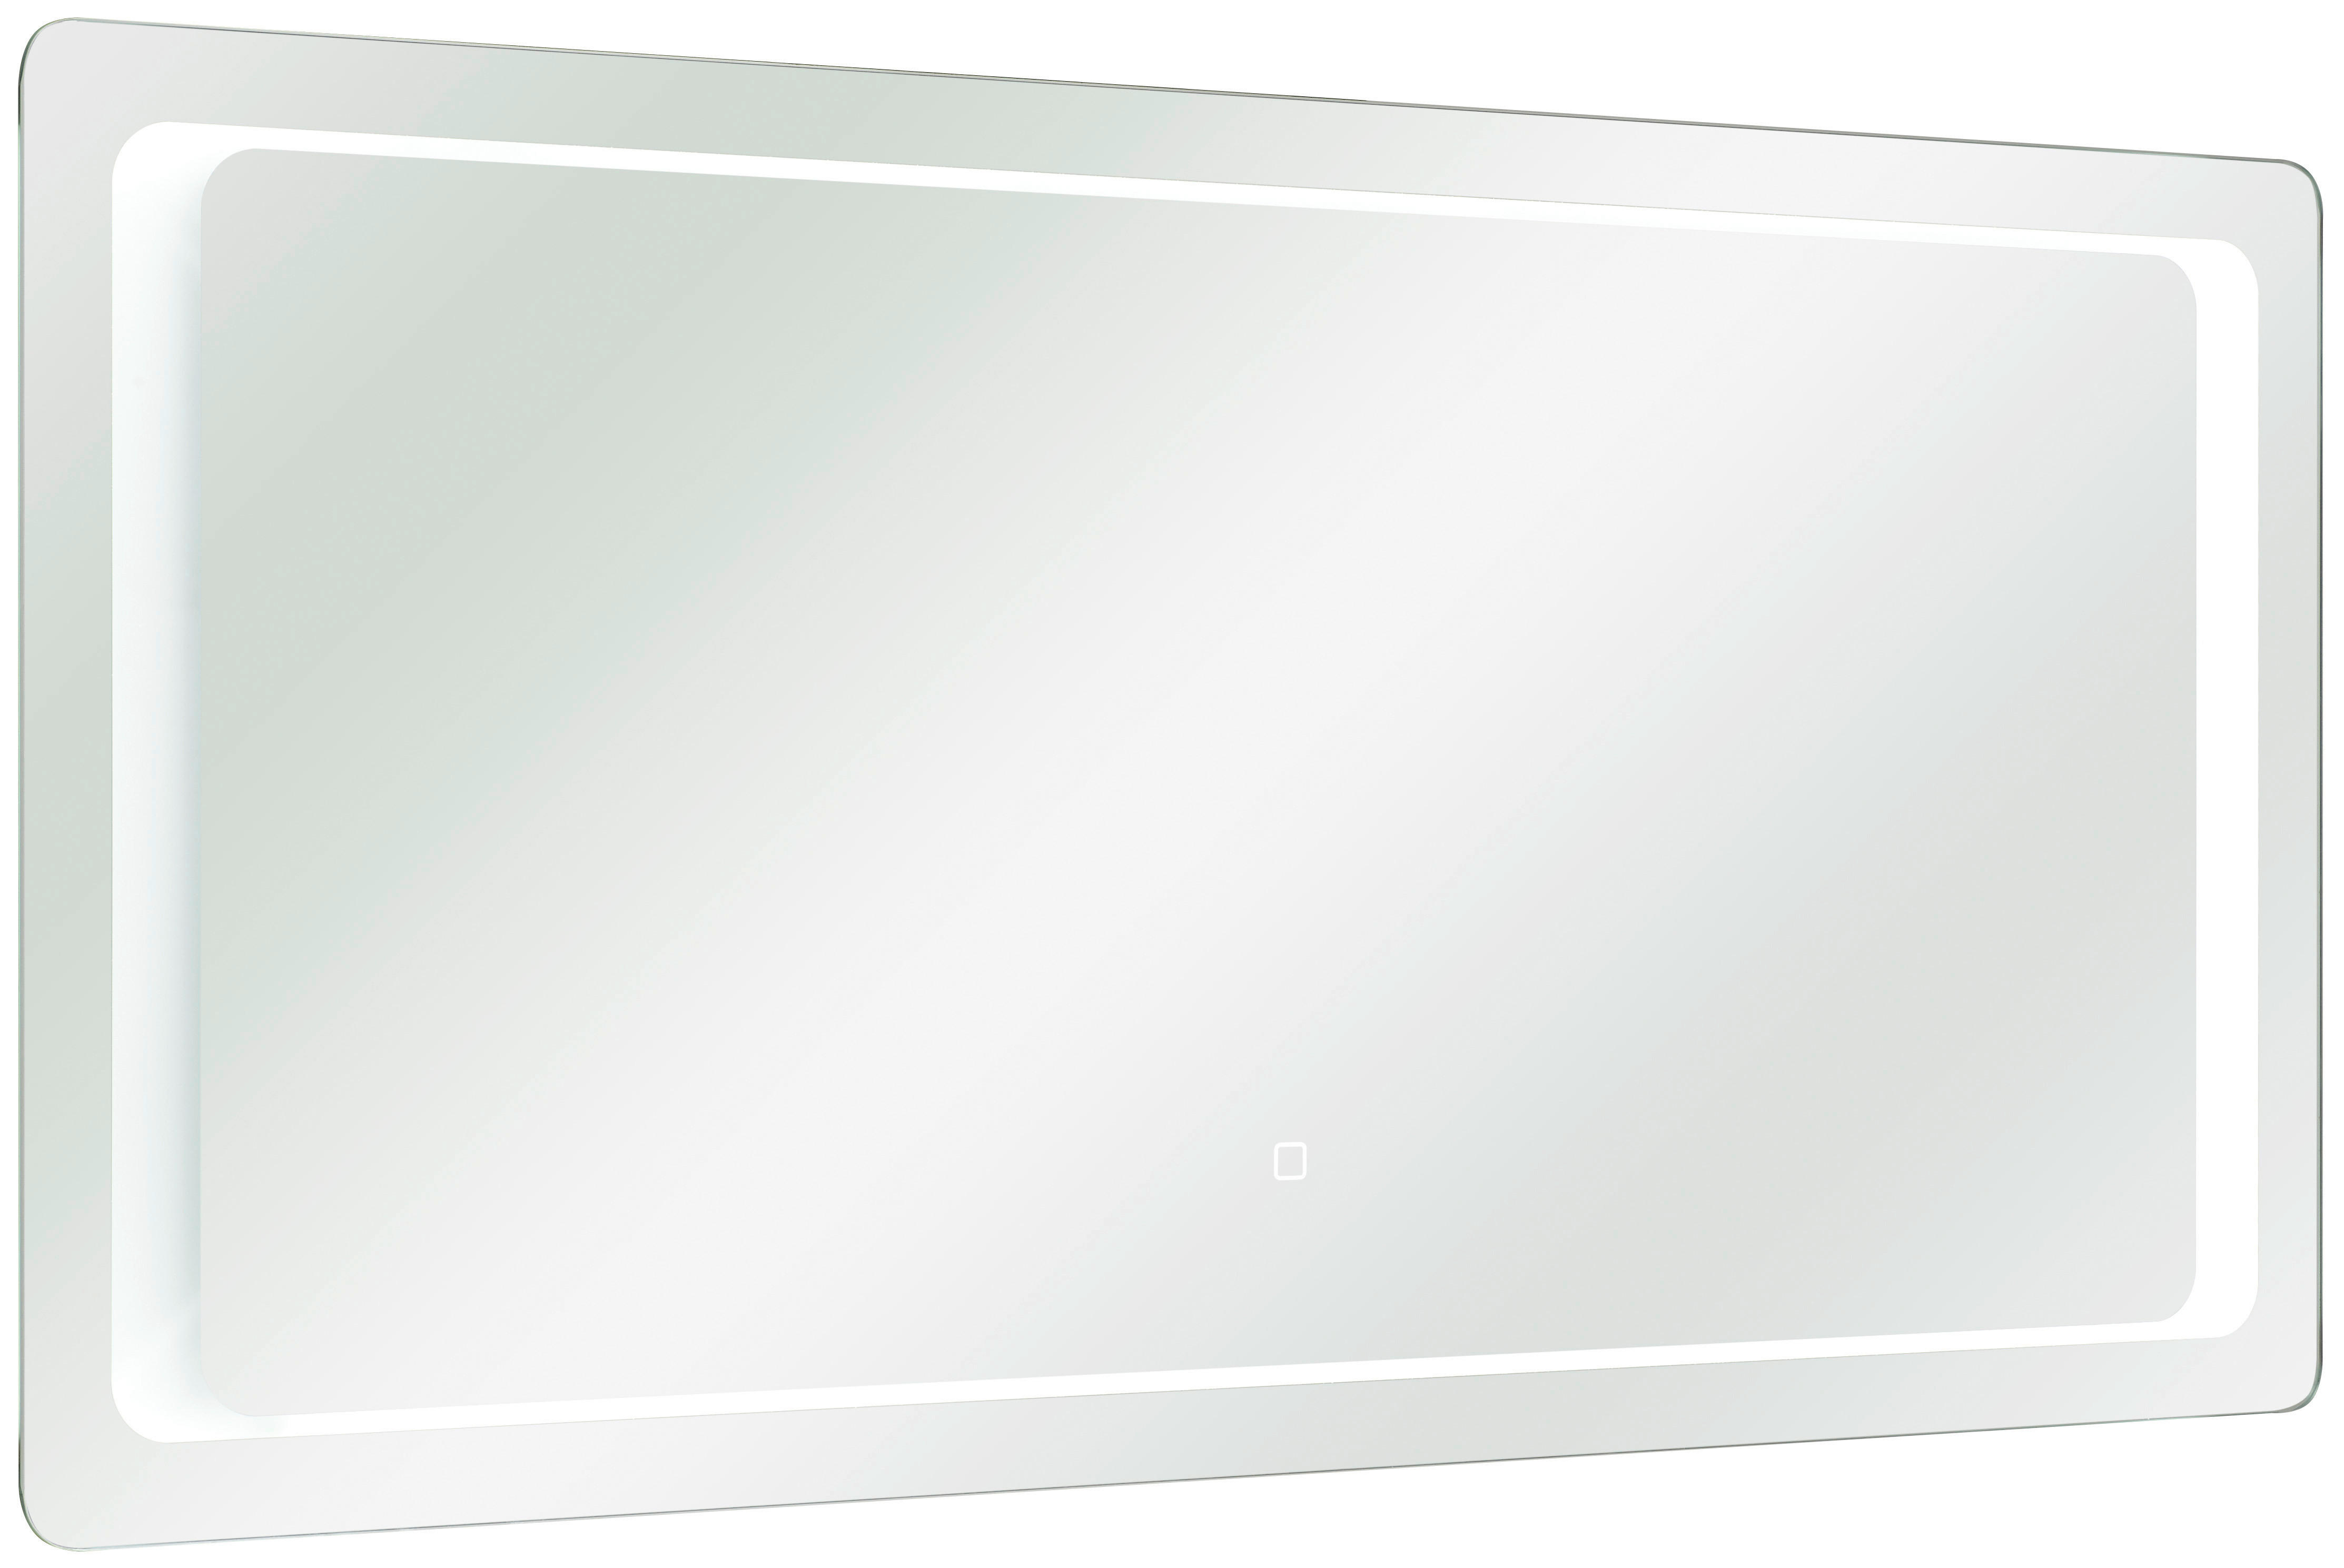 BADEZIMMERSPIEGEL 140/70/3 cm  - Basics, Glas (140/70/3cm) - Xora